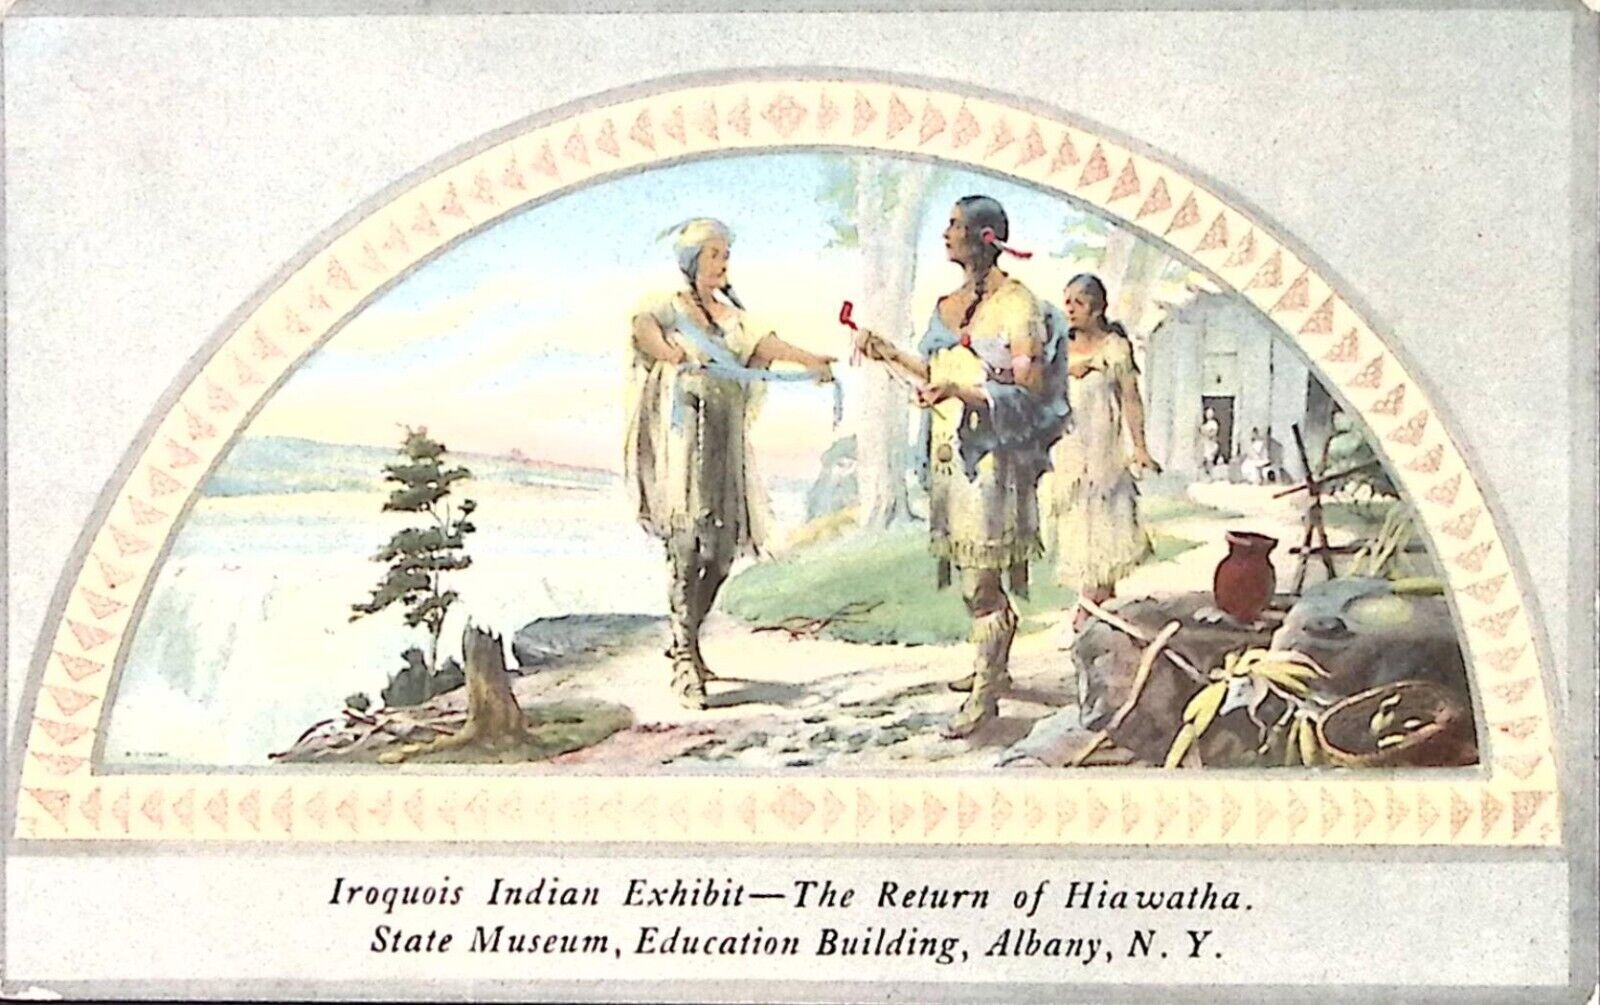 c1910 ALBANY NY IROQUOIS INDIAN EXHIBIT RETURN OF HIAWATHA POSTCARD P4483